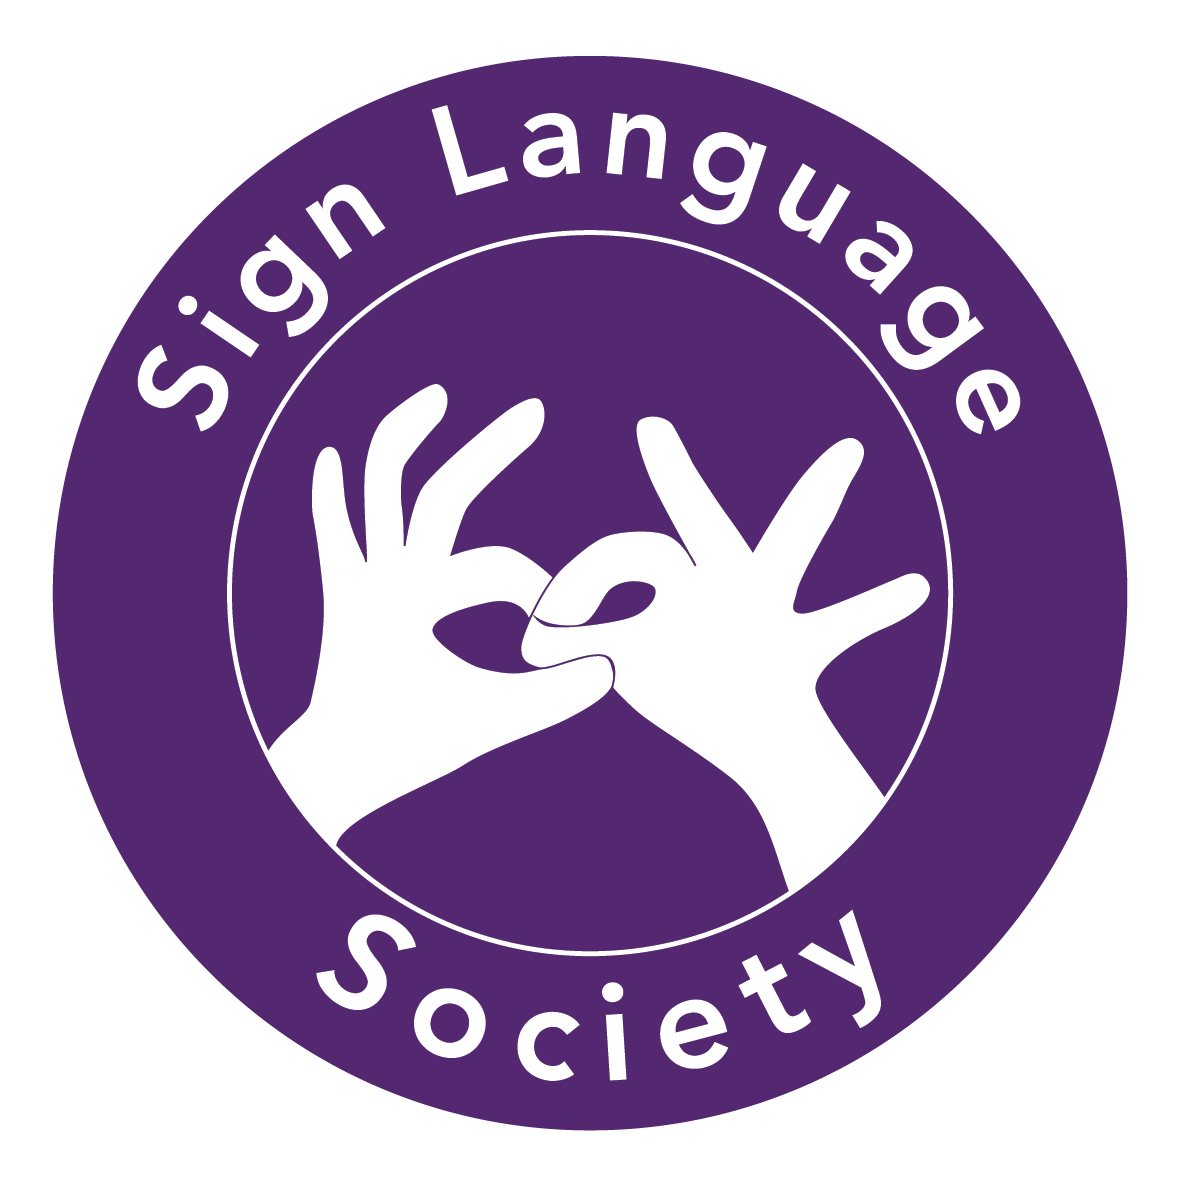 Sign Language Society